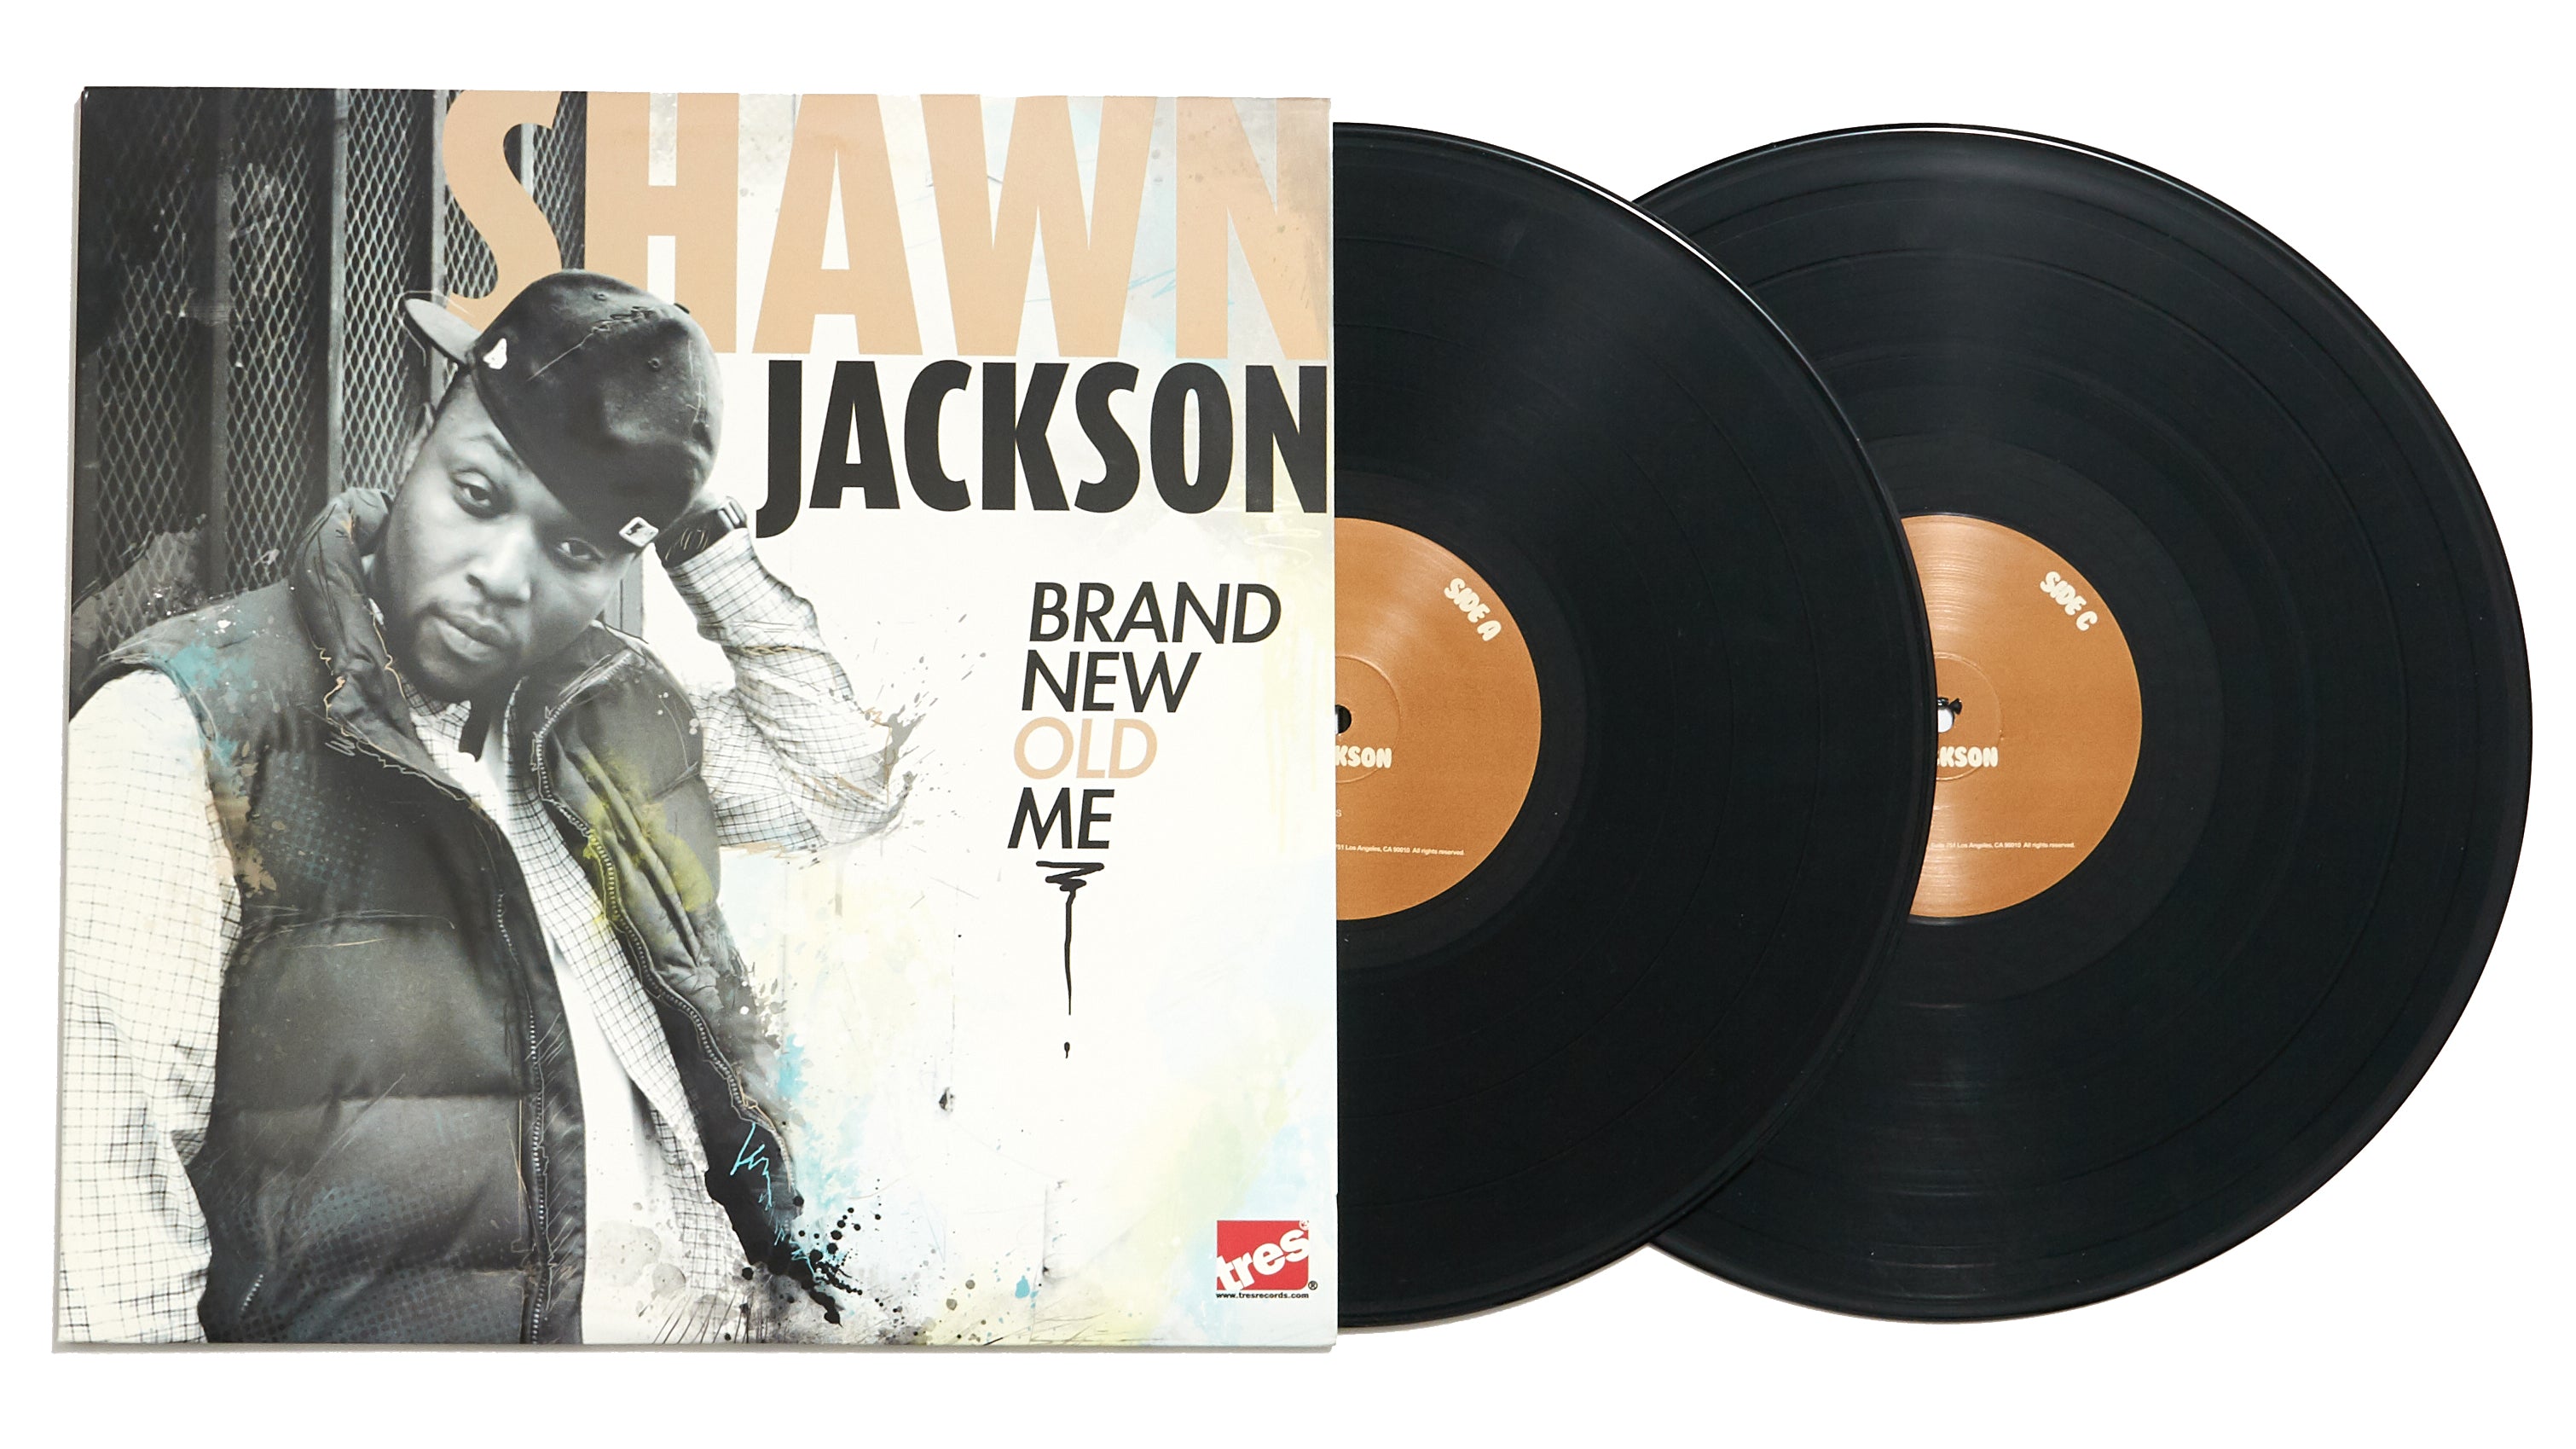 Shawn Jackson "Brand New Old Me" (LP)